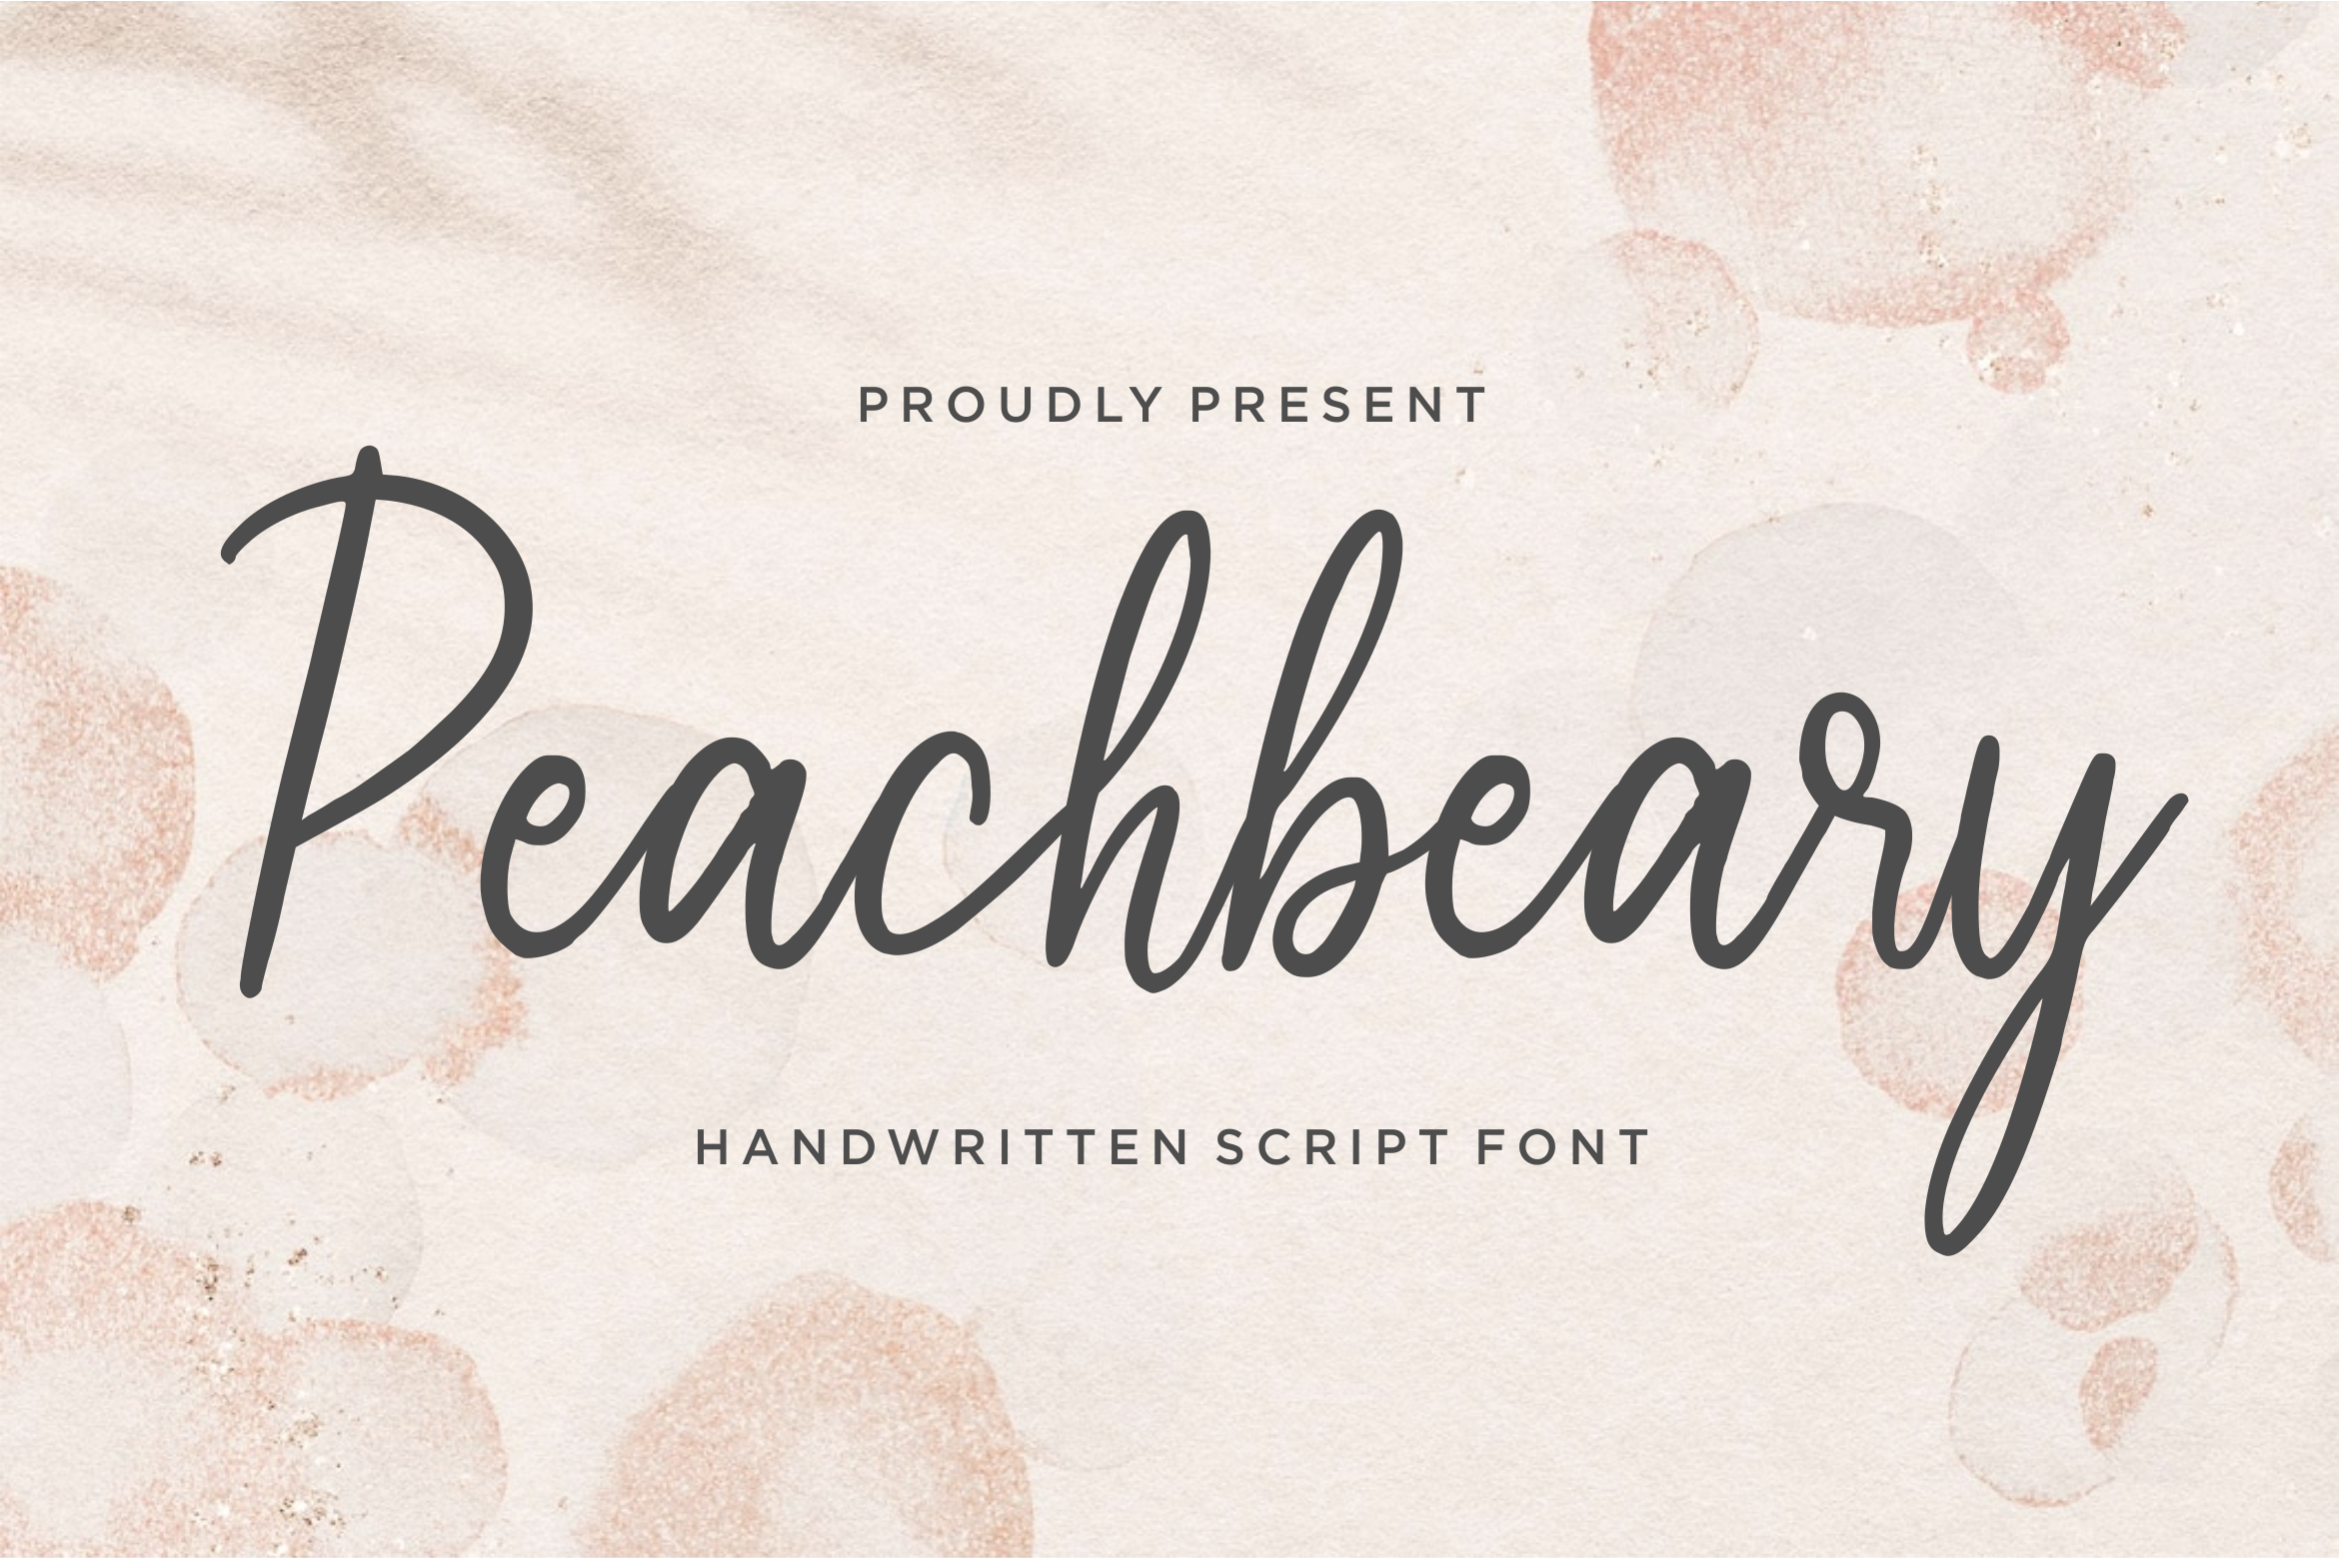 Peachbeary Script Font